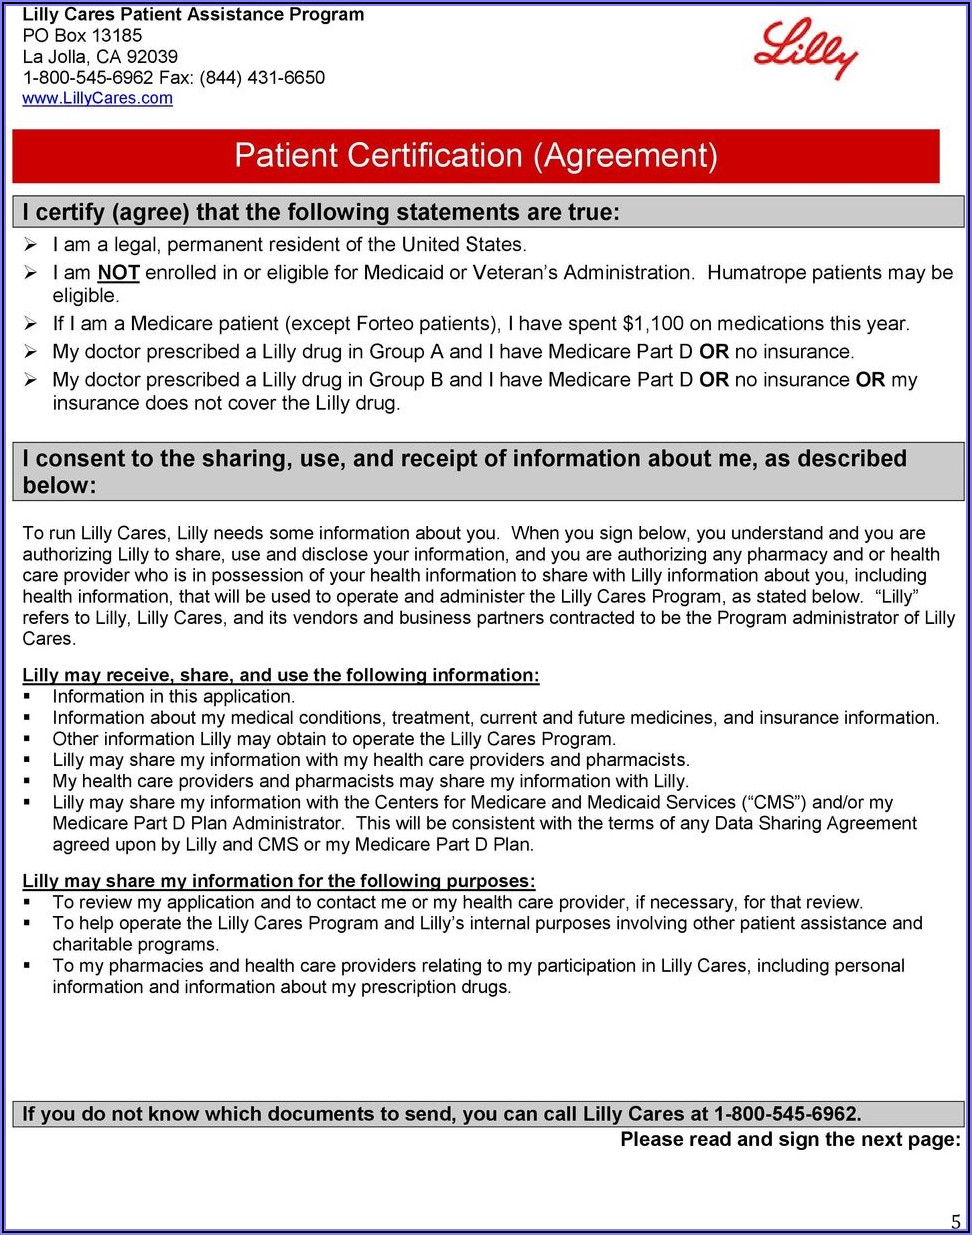 Humira Patient Assistance Program Form